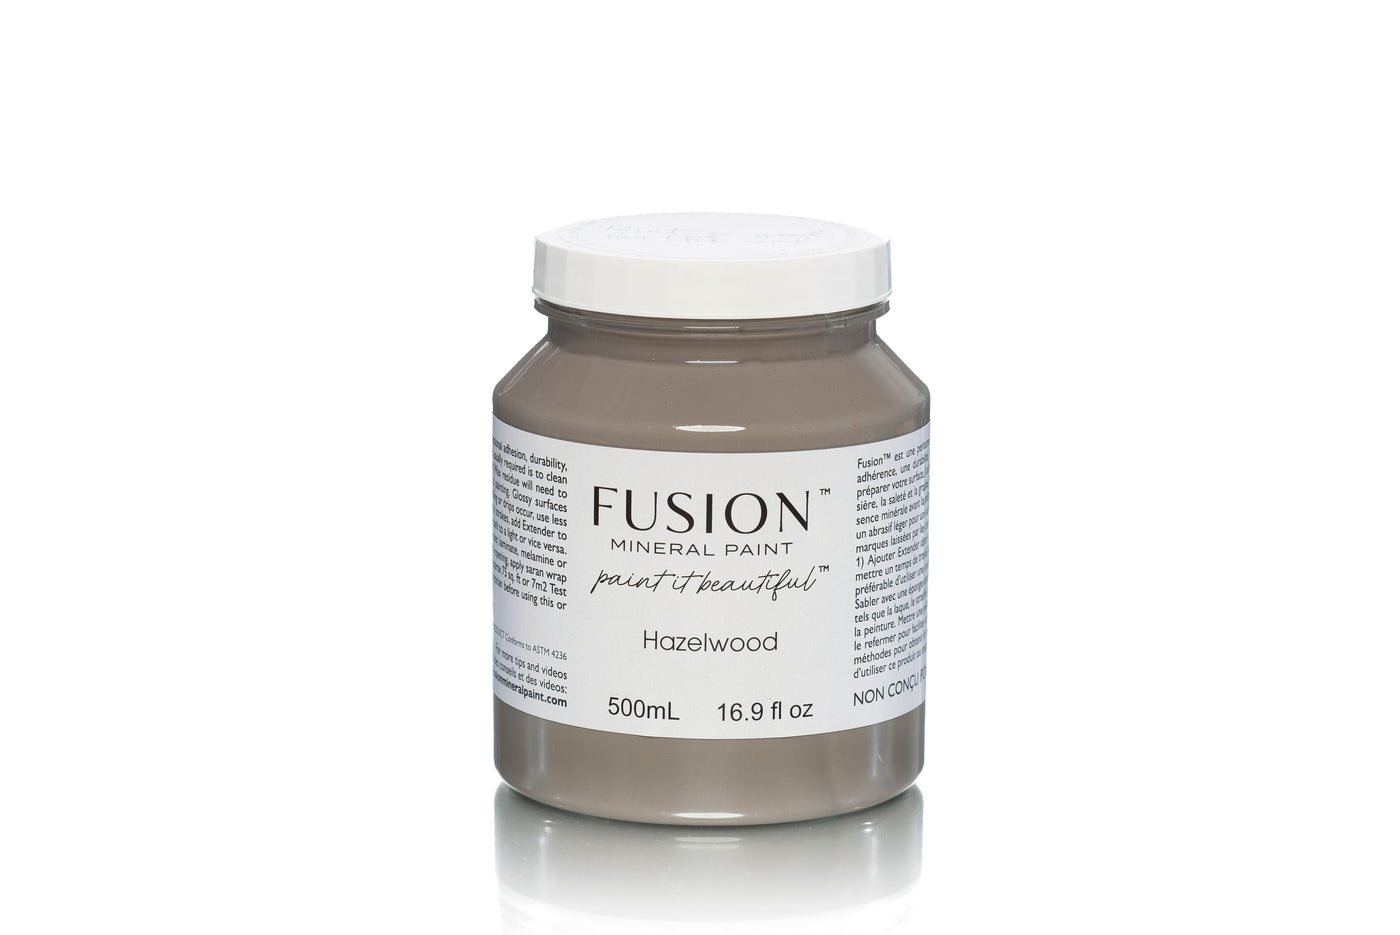 Fusion Mineral Paint Hazelwood warm rich grey 500ml Australian retailer